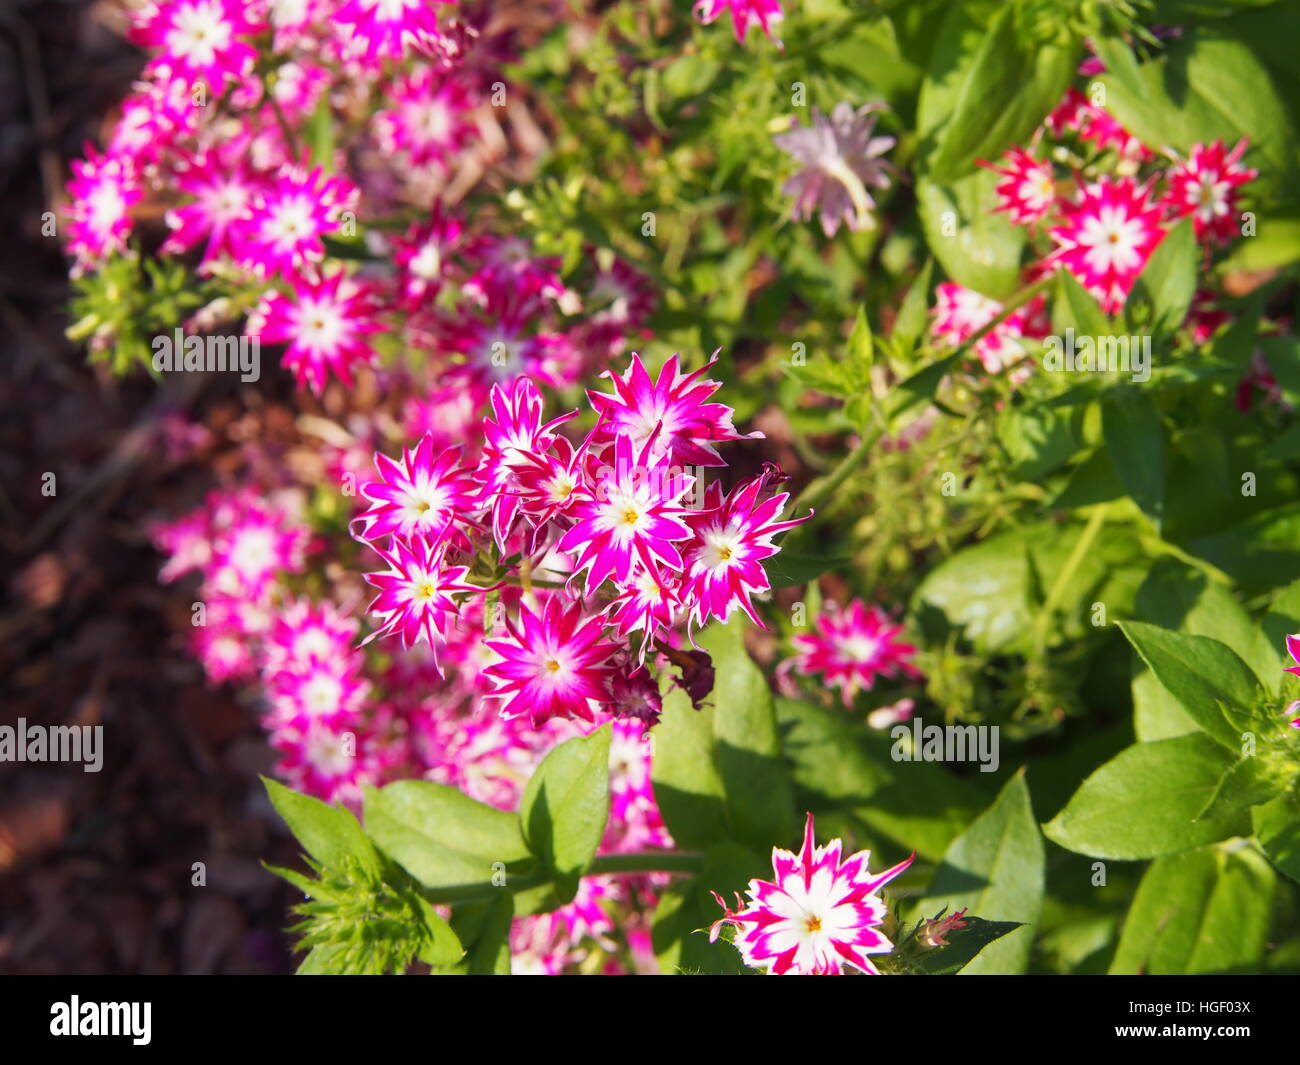 Phlox drummondii 'Twinkle Star' blooming in the garden Stock Photo